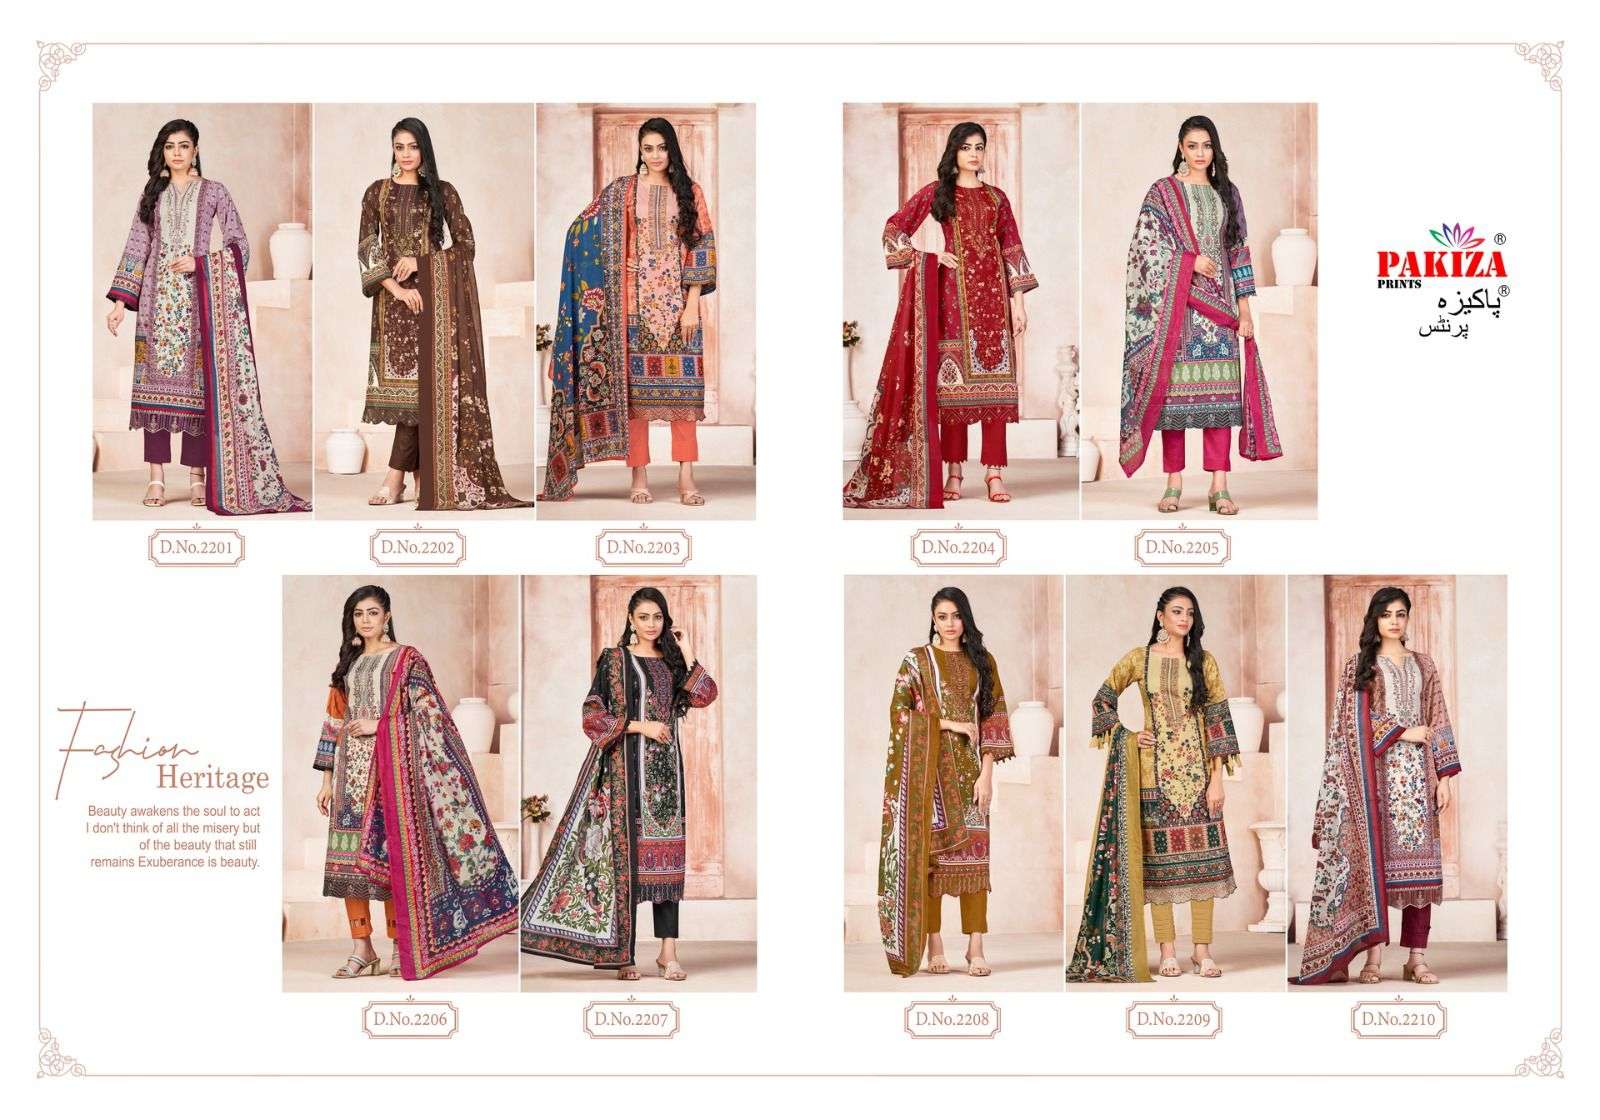 pakiza prints shifa safiya vol-22 2201-2210 series latest pakistani salwar kameez wholesaler surat gujarat